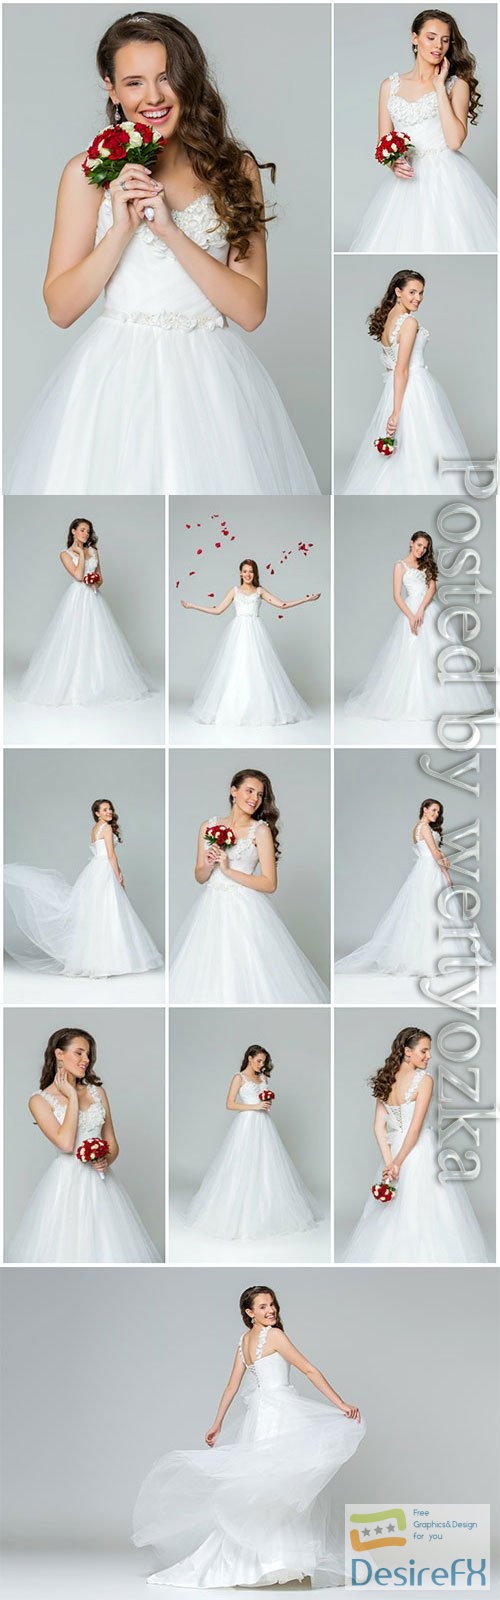 Happy bride in luxury wedding dress stock photo